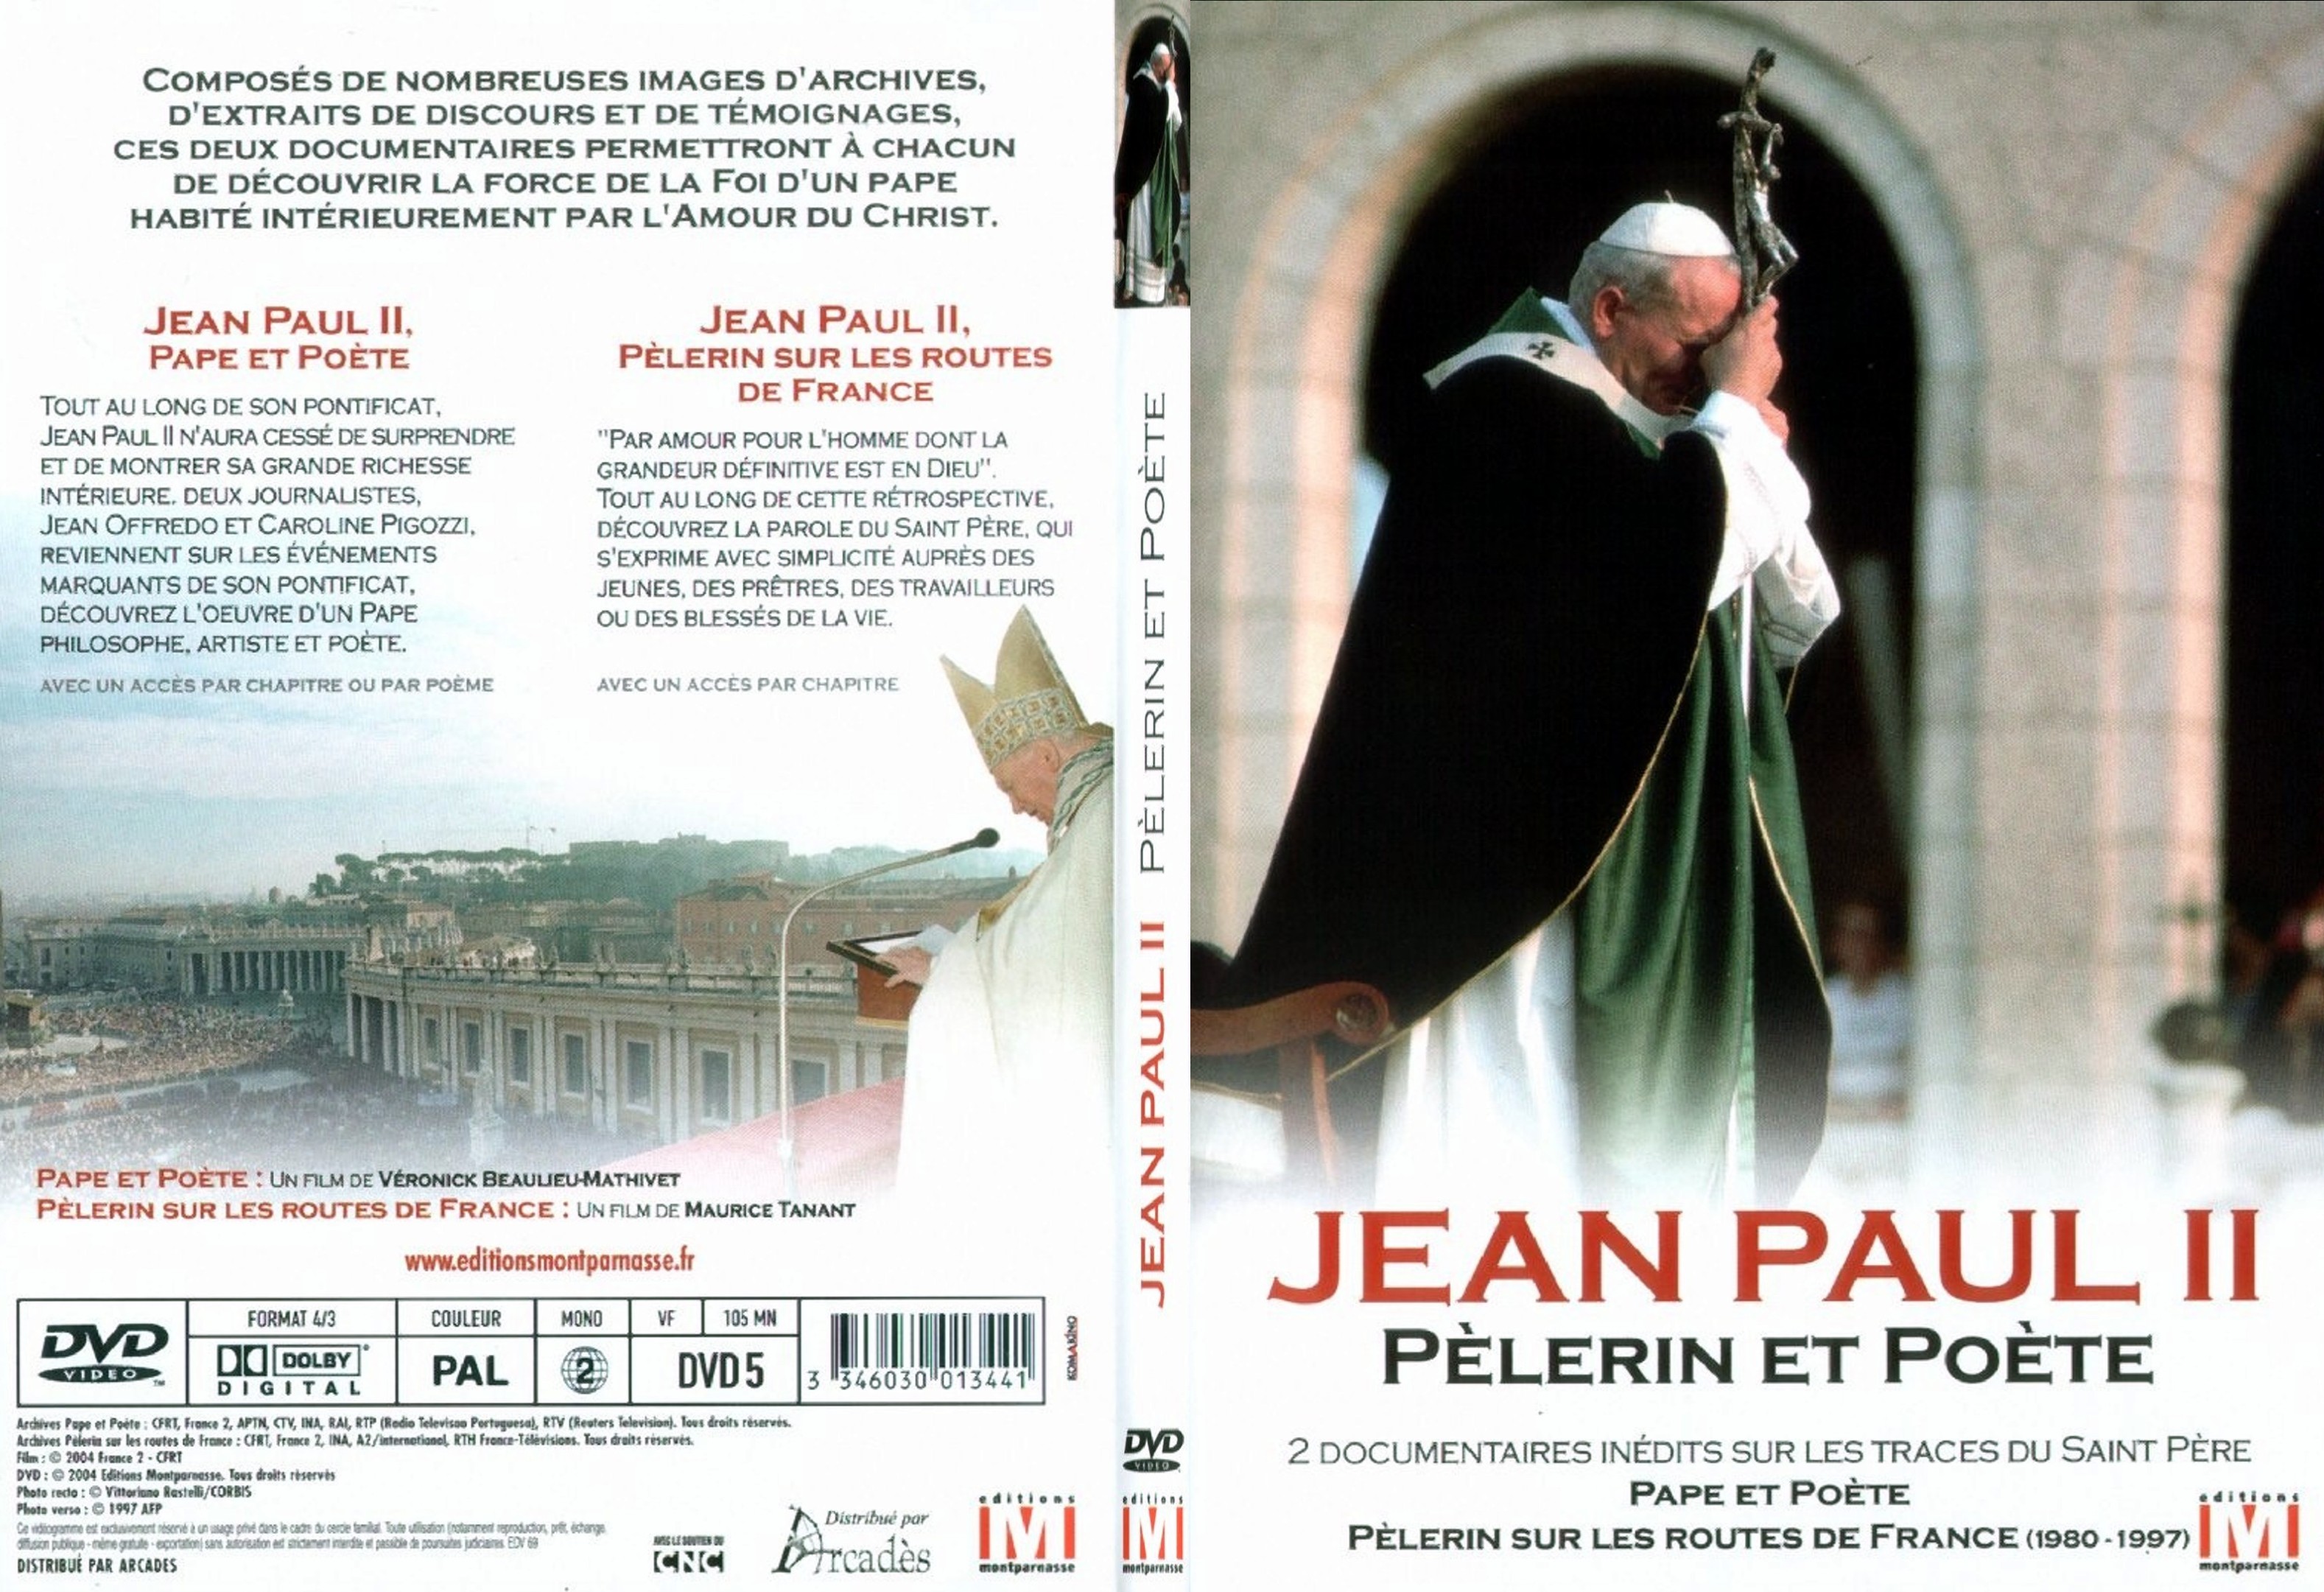 Jaquette DVD Jean Paul 2 - Plerin et pote - SLIM